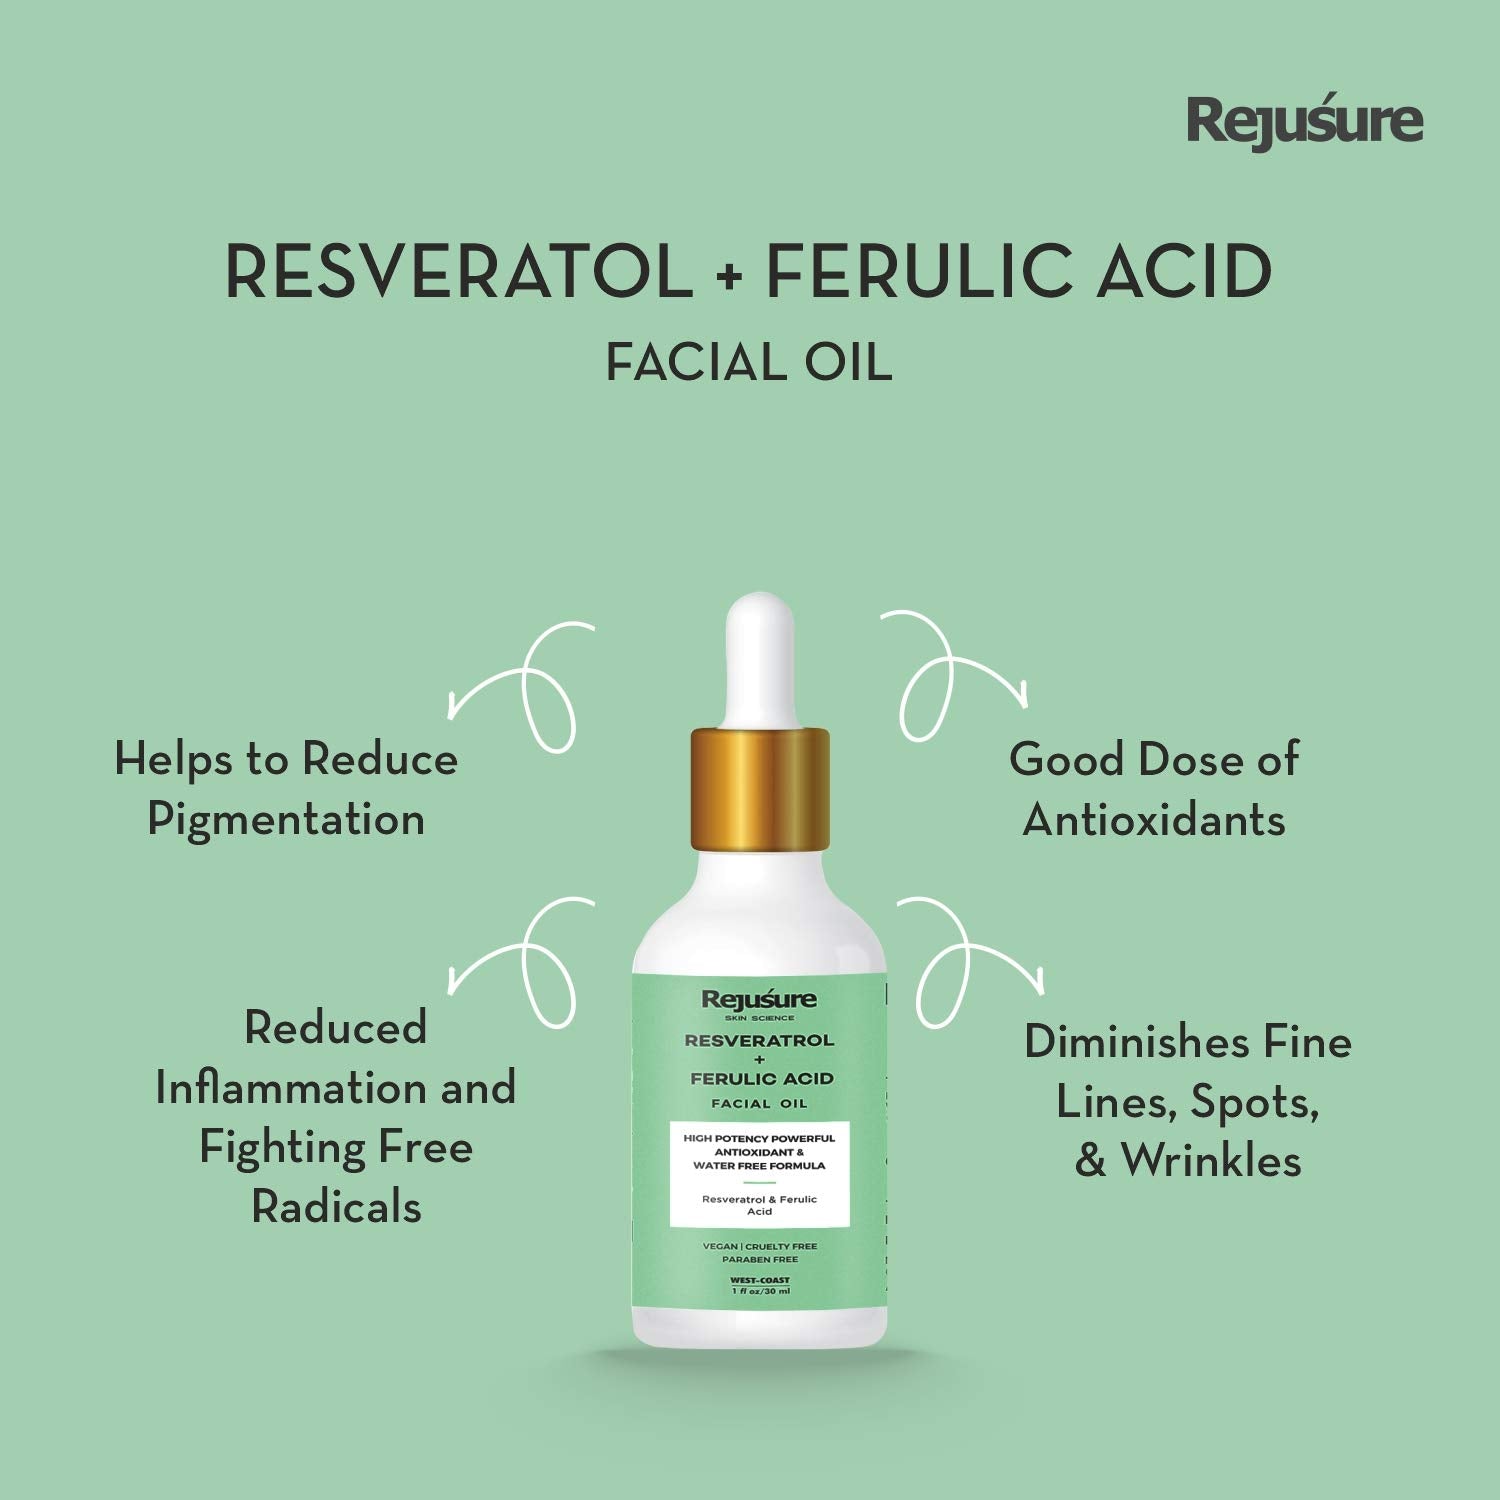 Rejusure Resveratrol & Ferulic Acid Facial Oil High Potency Powerful Antioxidant & Water Free Formula- 30ml (Pack of 3)